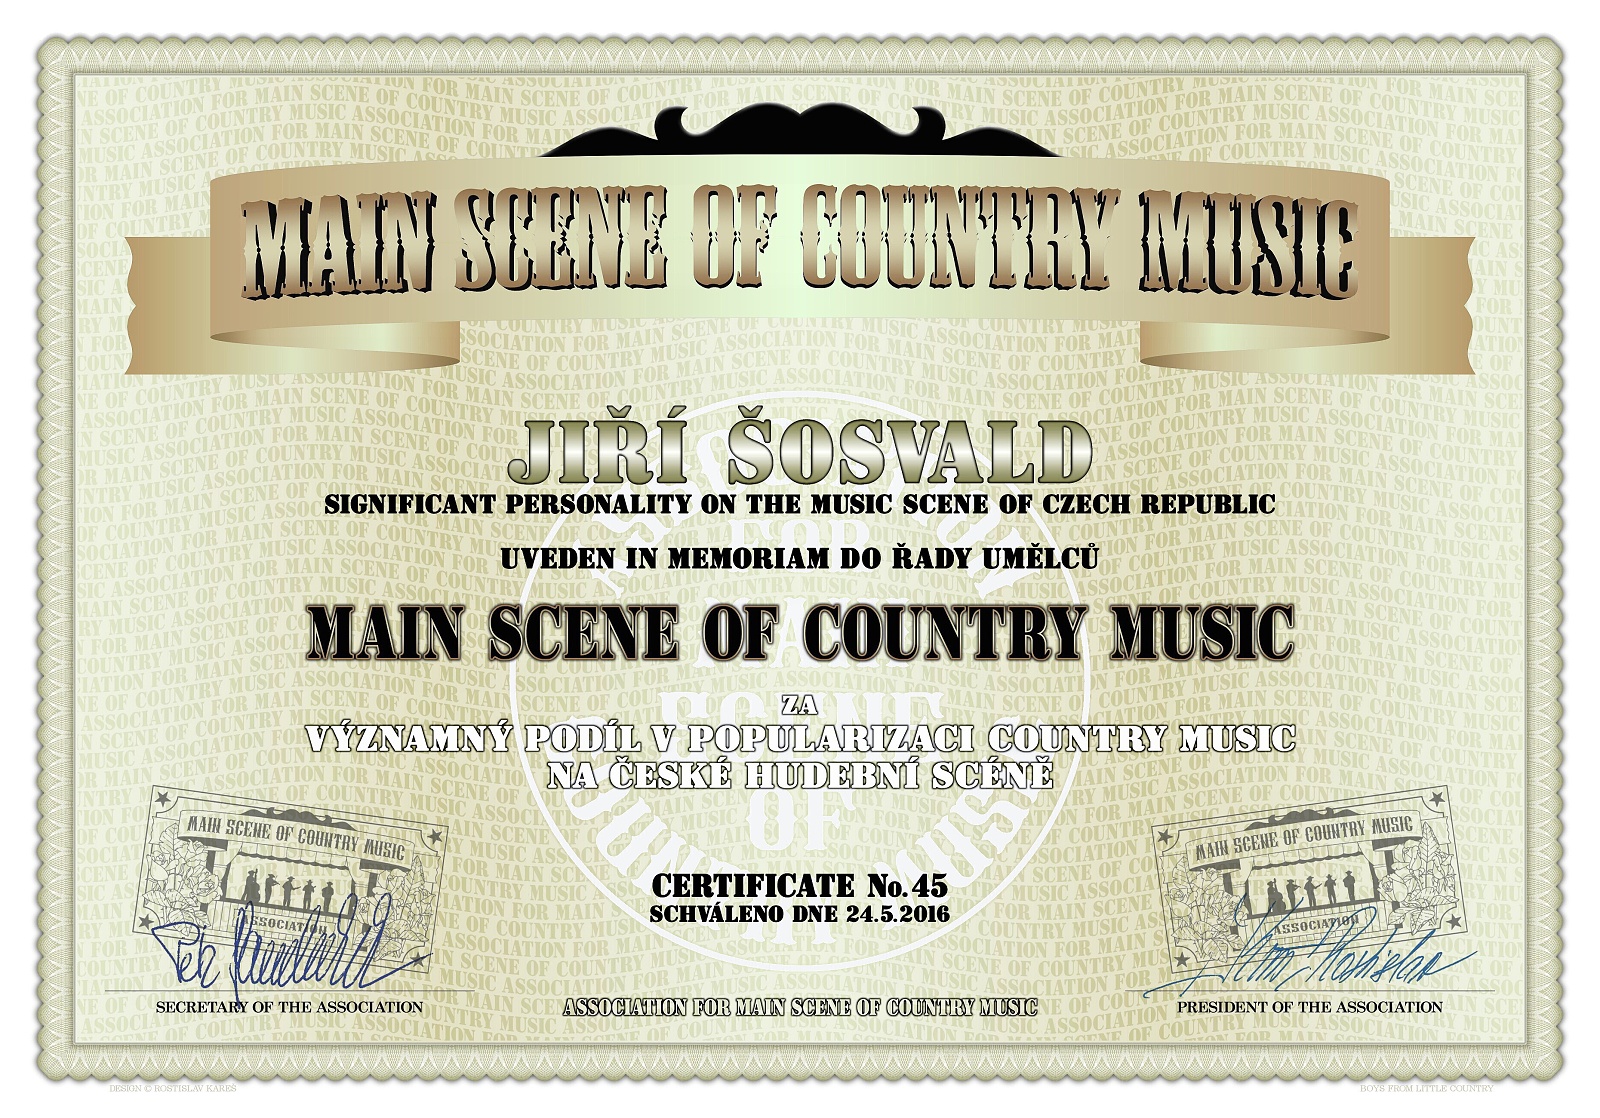 CE 45 - Main Scene of Country Music